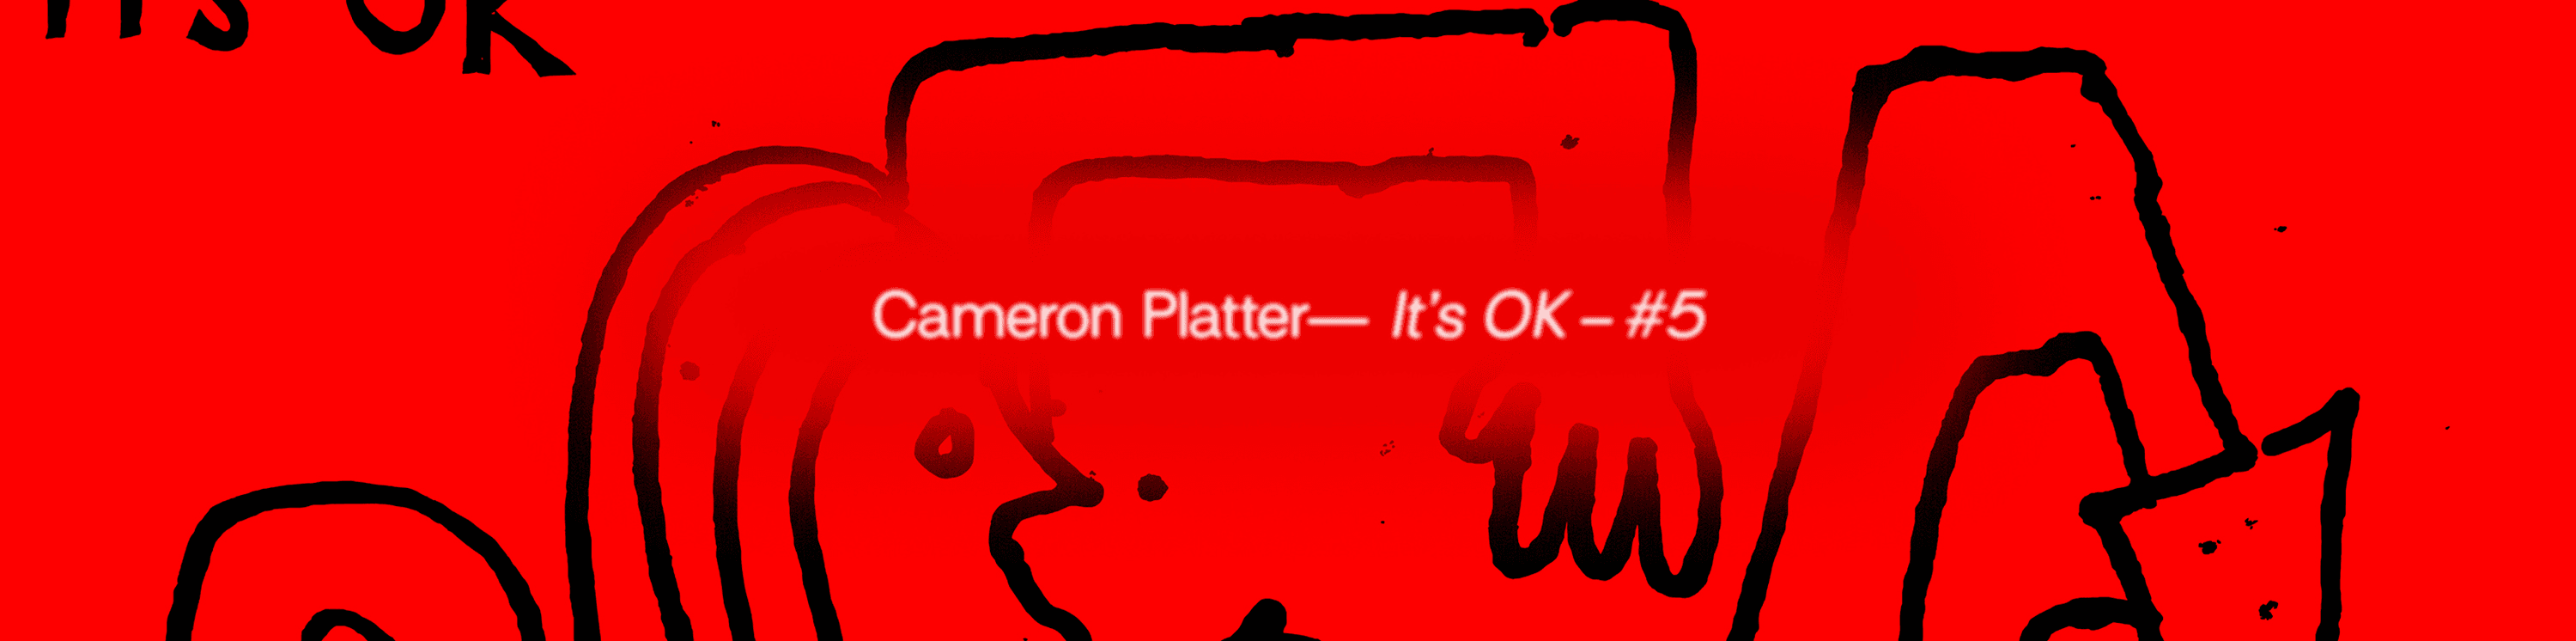 Cameron Platter - It's OK